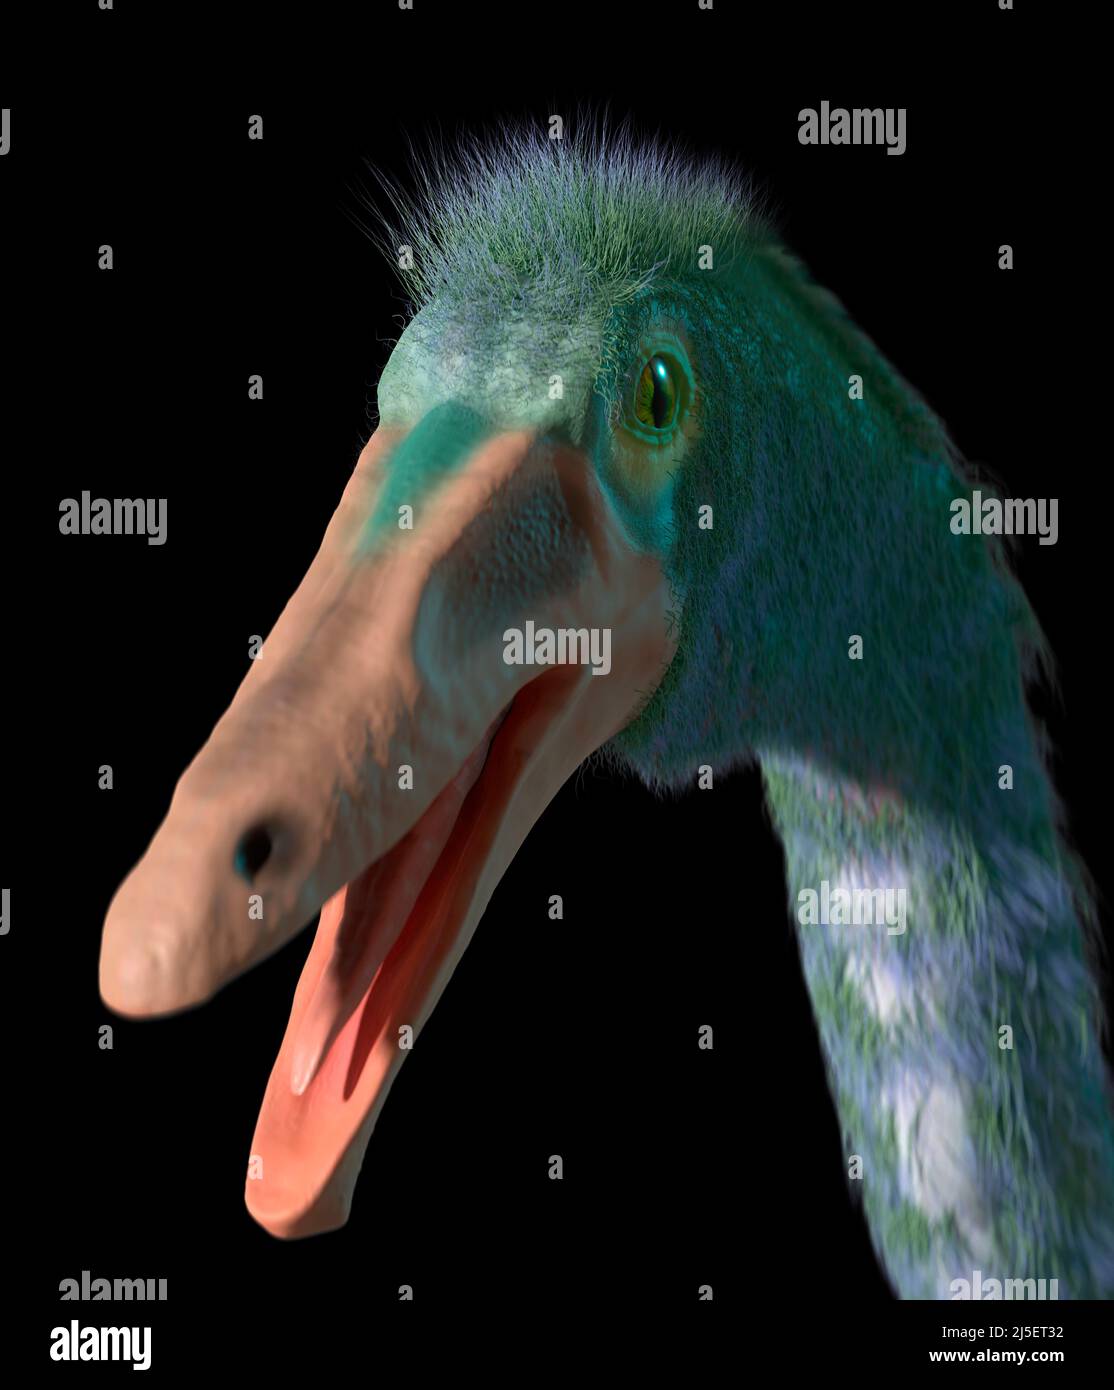 Artwork of dinosaur Gallimimus Stock Photo